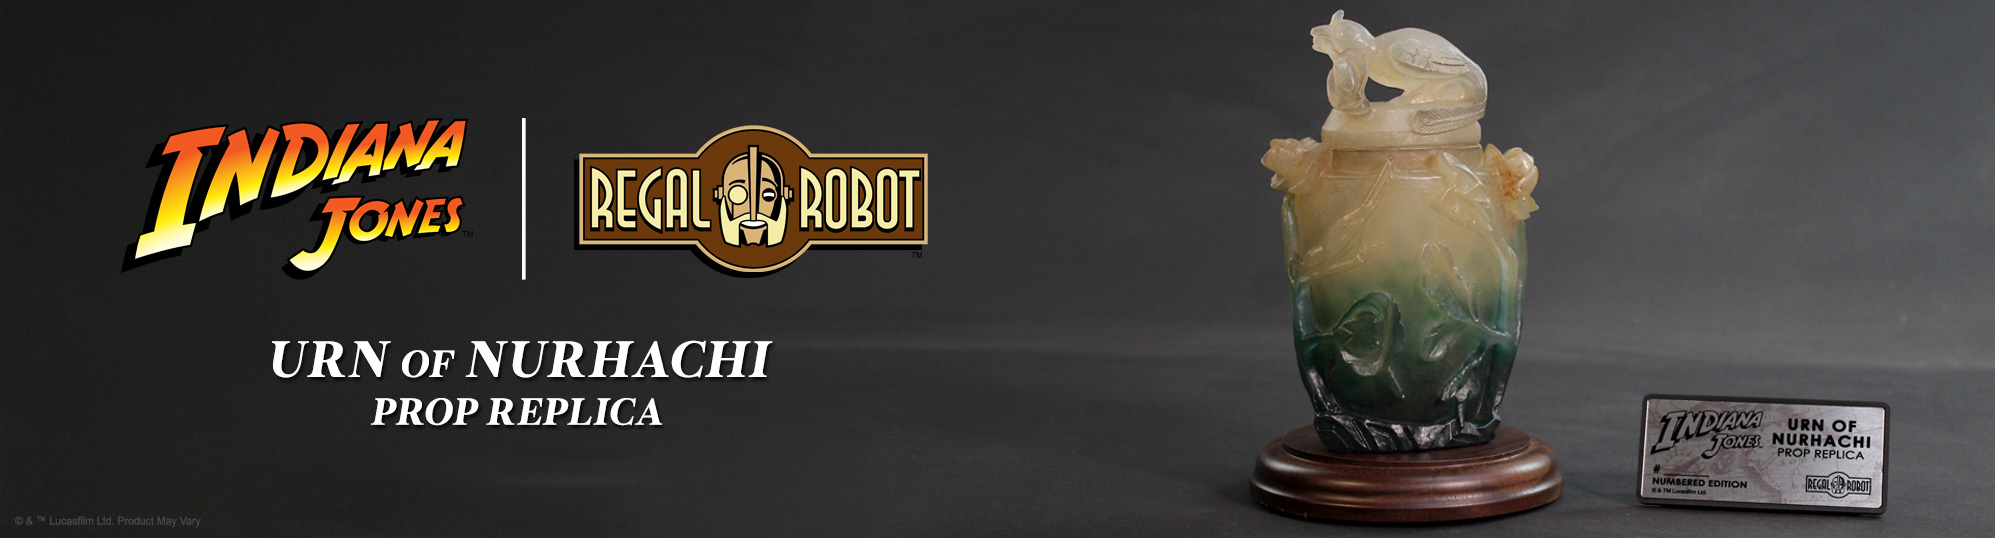 Regal Robot's prop replica Nurhachi Urn from Indiana Jones and the Temple of Doom™